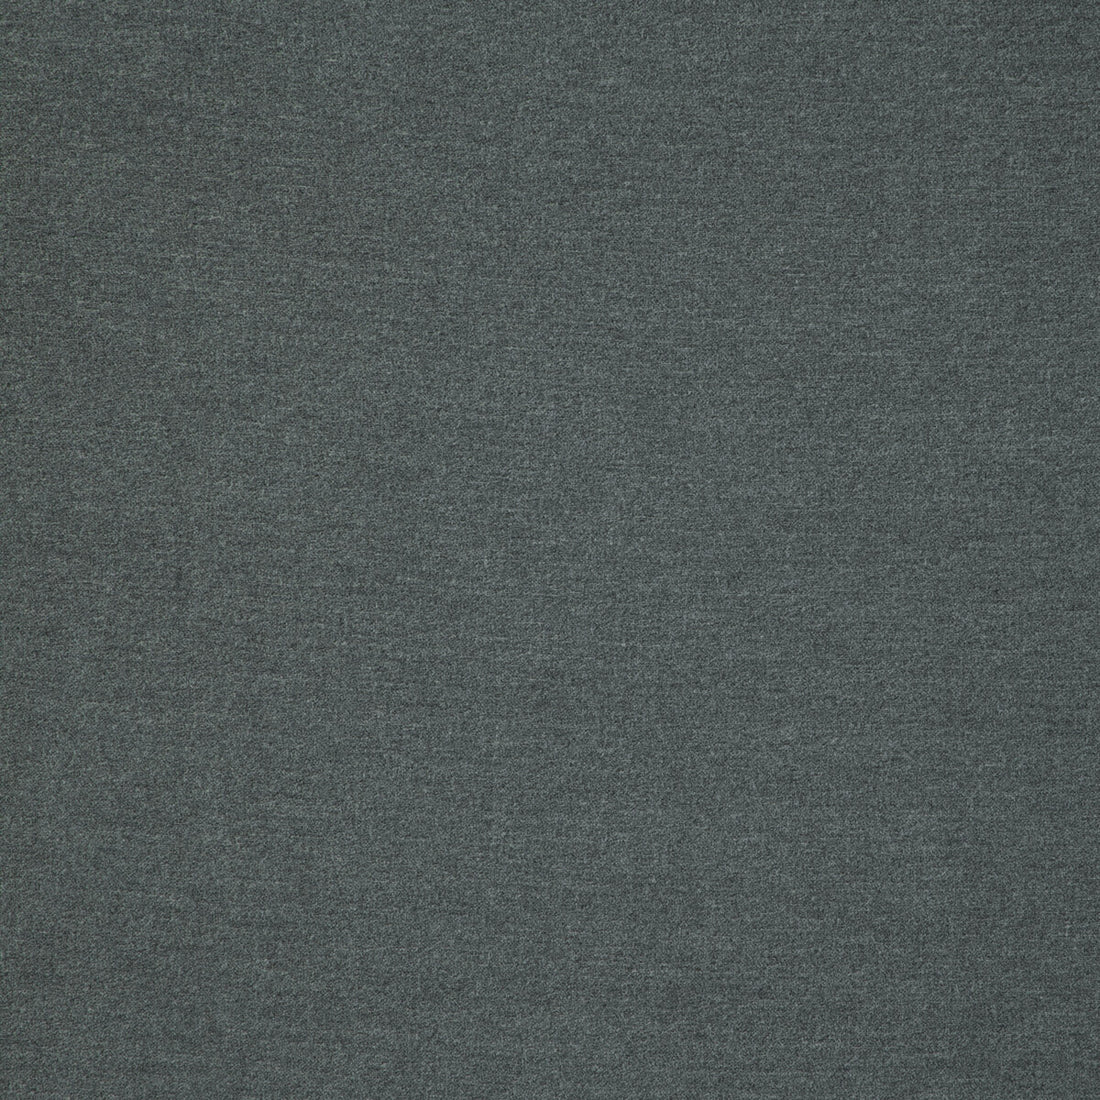 Kravet Smart fabric in 37000-311 color - pattern 37000.311.0 - by Kravet Smart in the Performance Kravetarmor collection